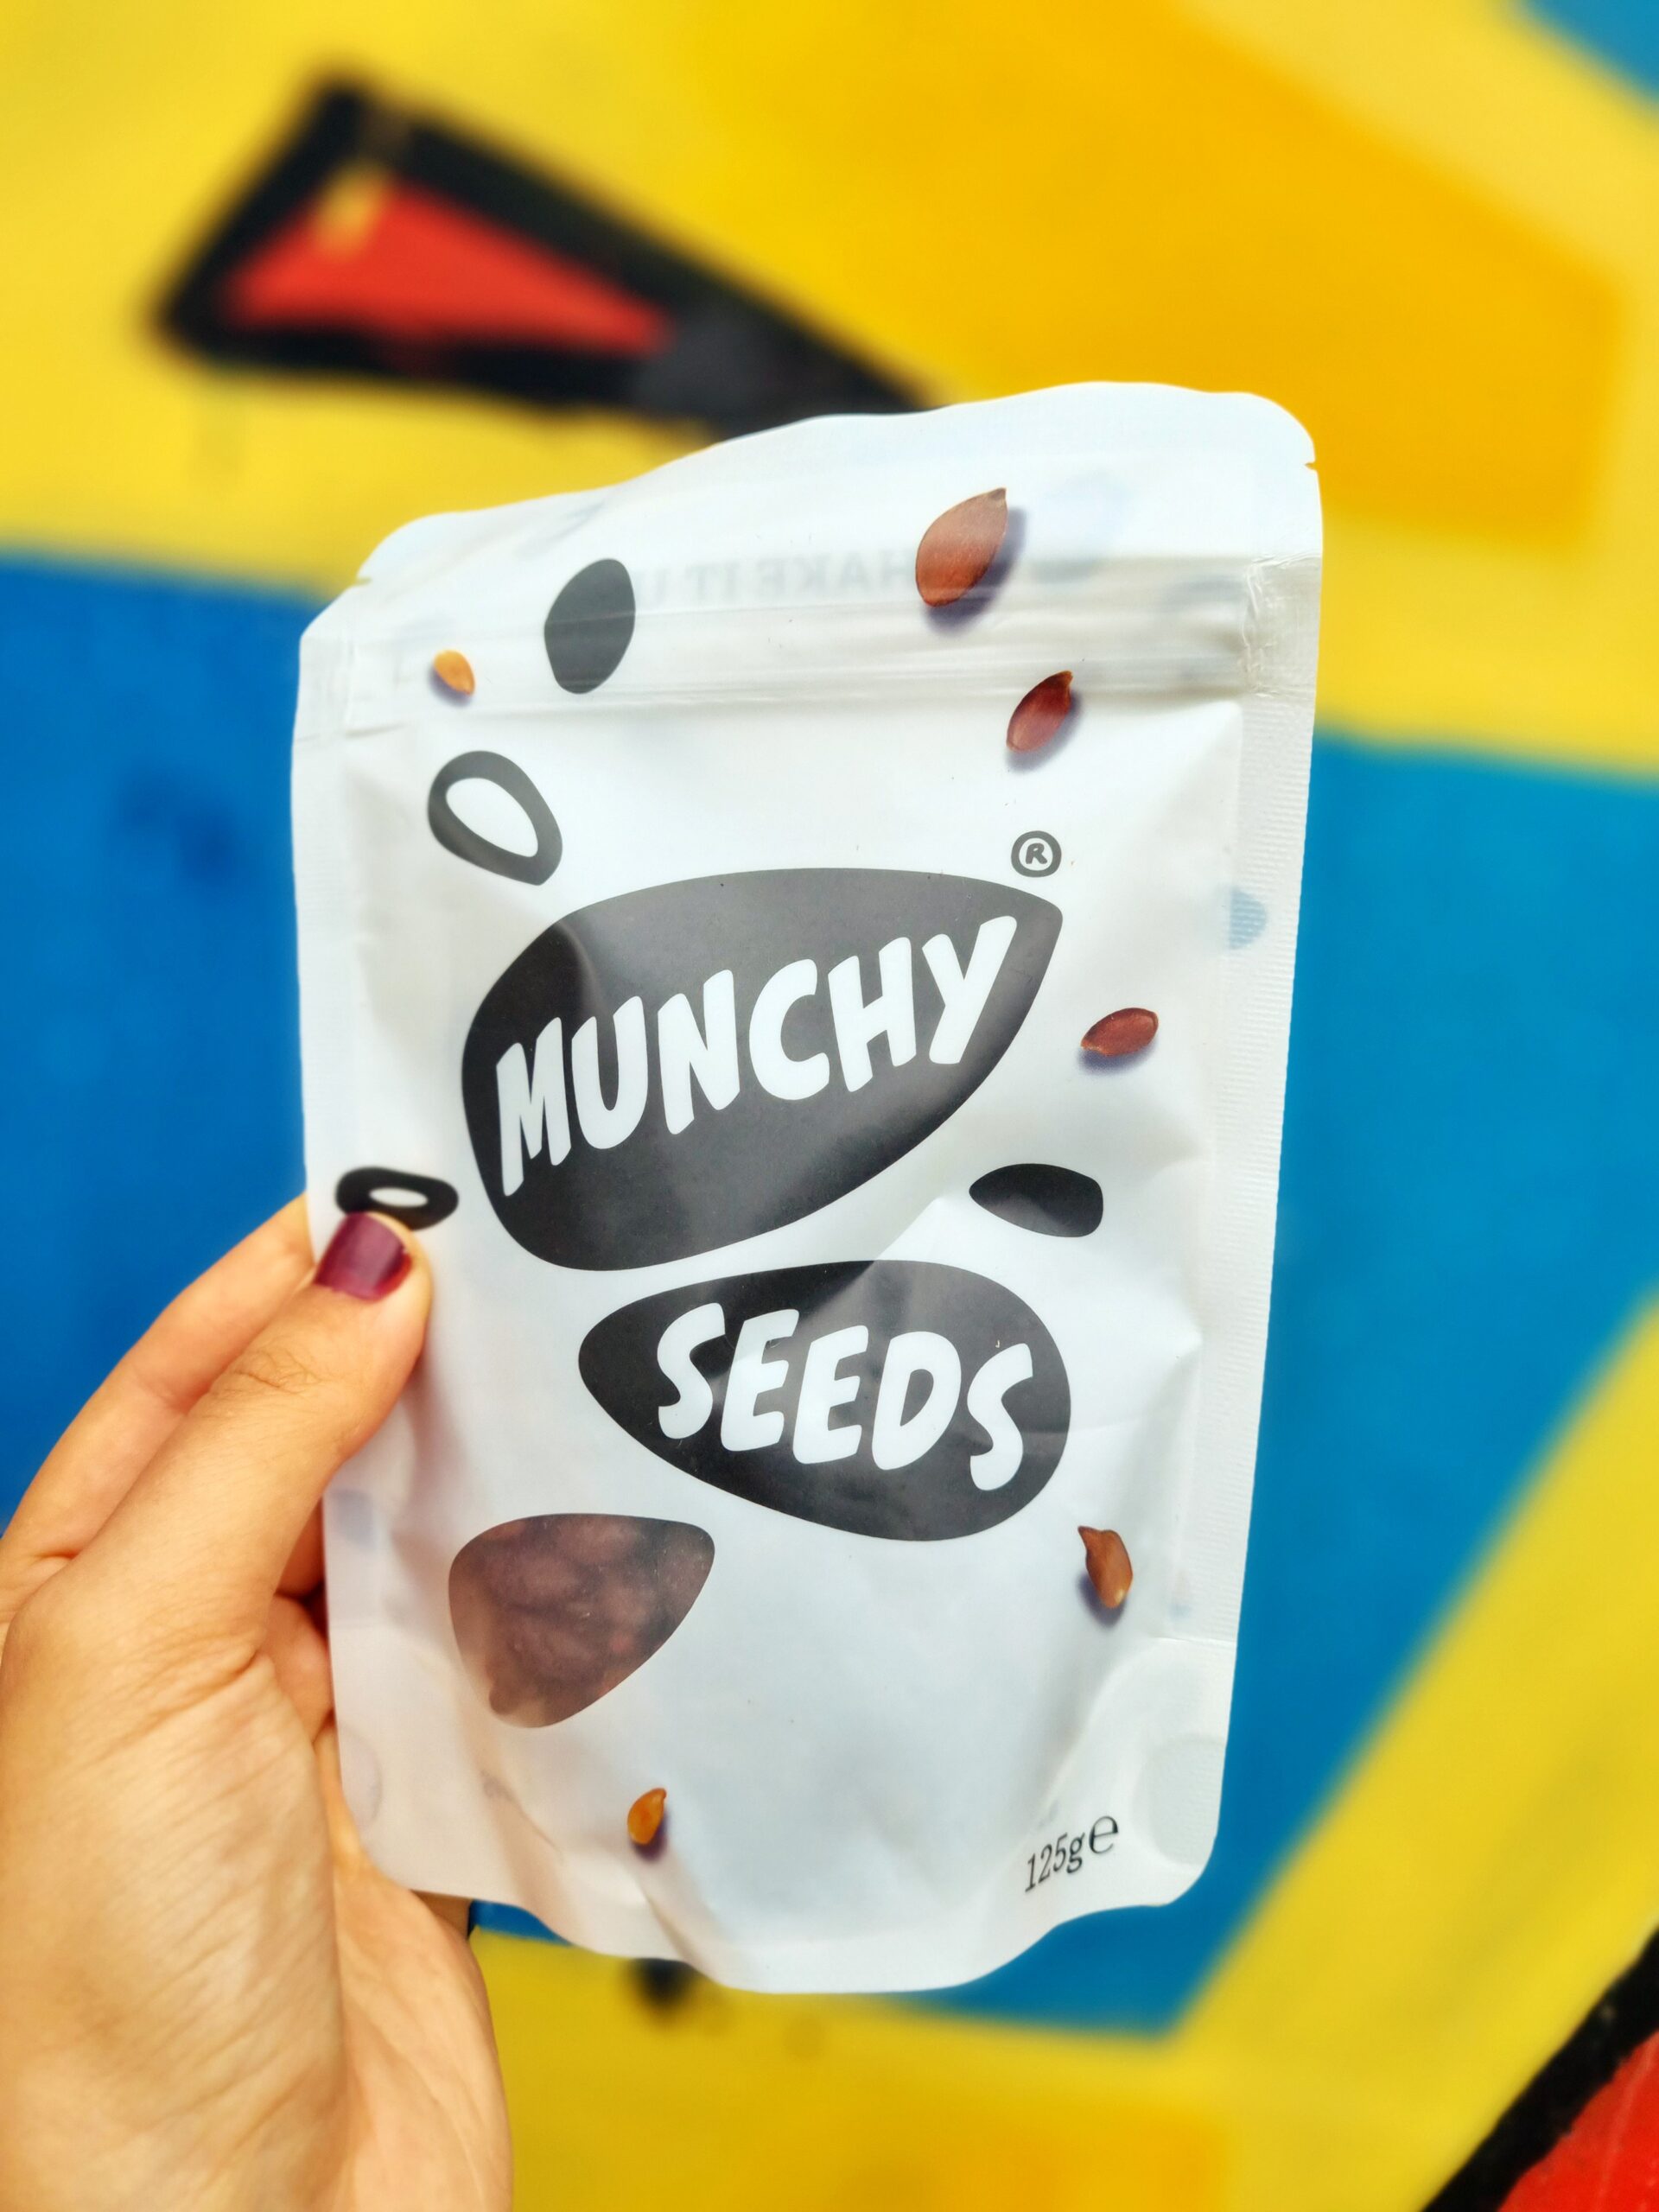 <img src="munchy seeds.jpg" alt="munchy seeds budget friendly christmas"/>